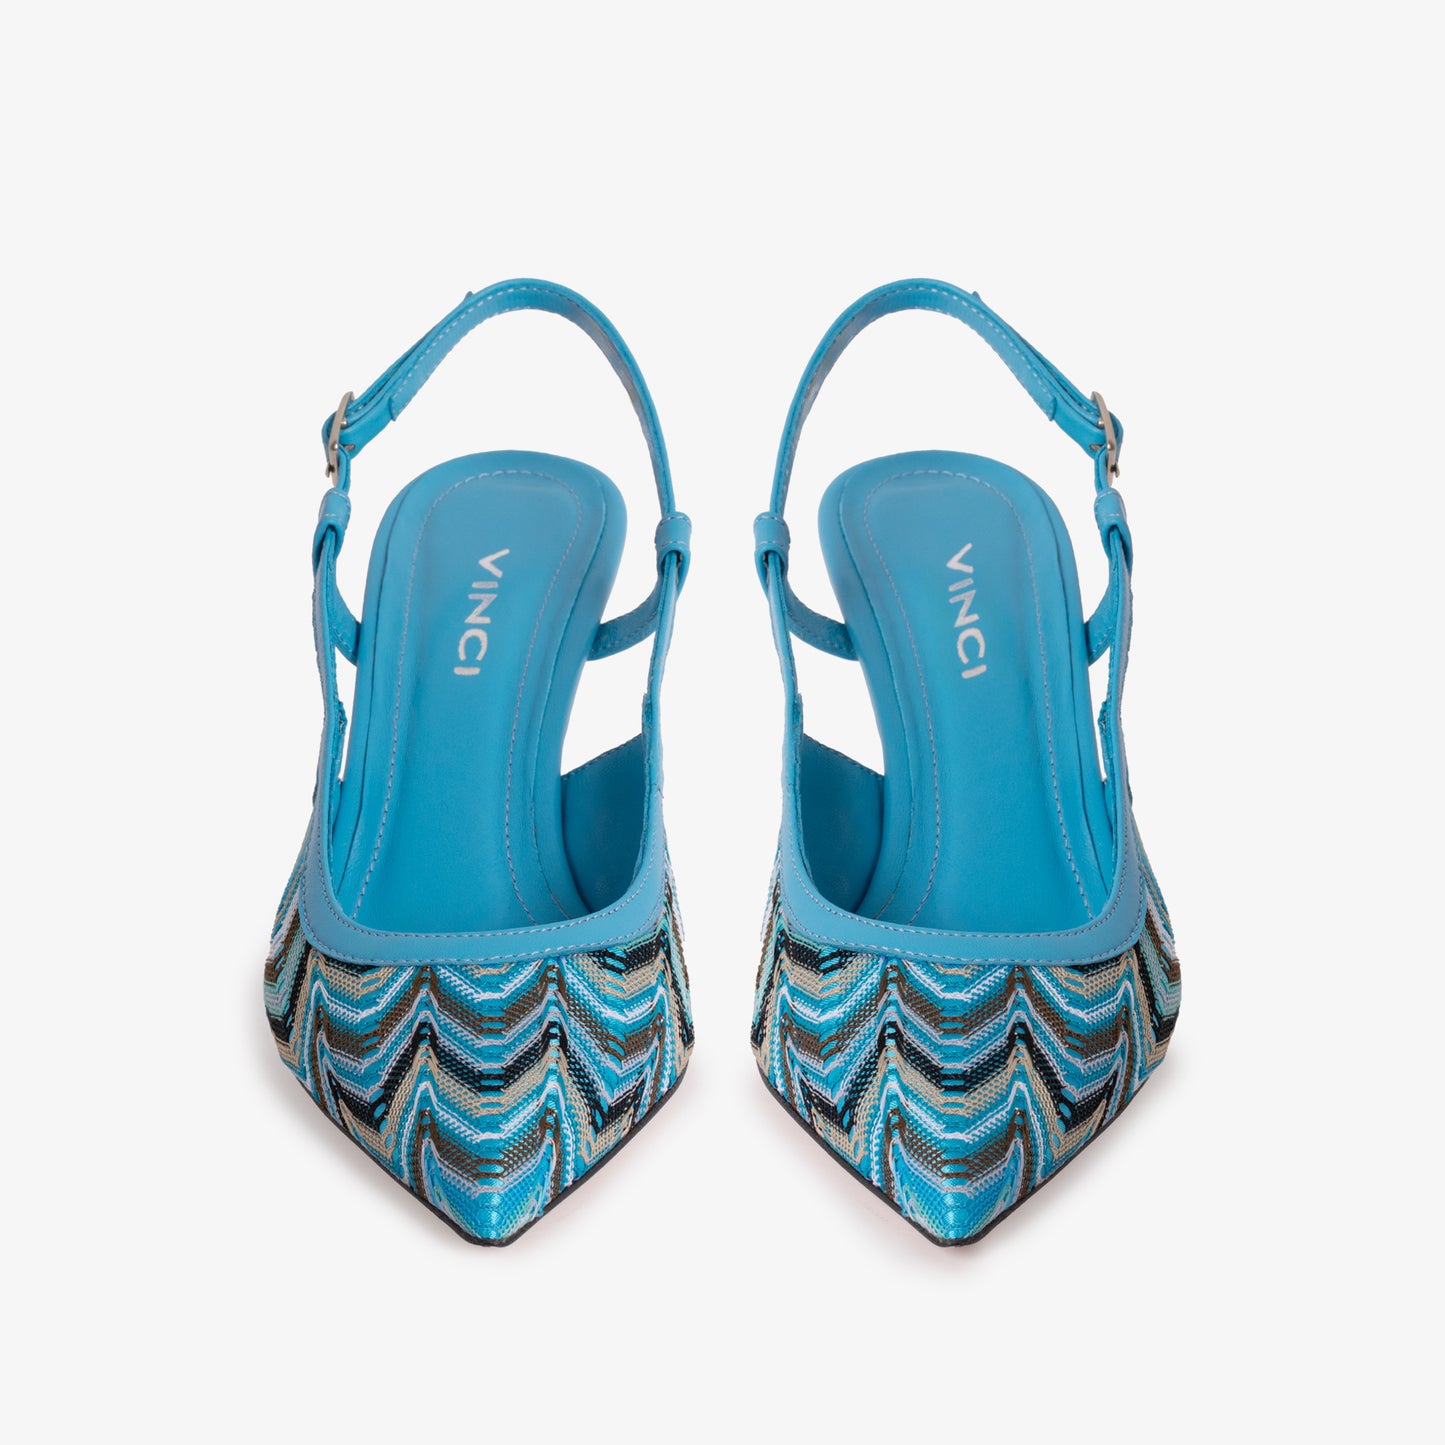 The Napoli Blue Leather Slingback Women Sandal